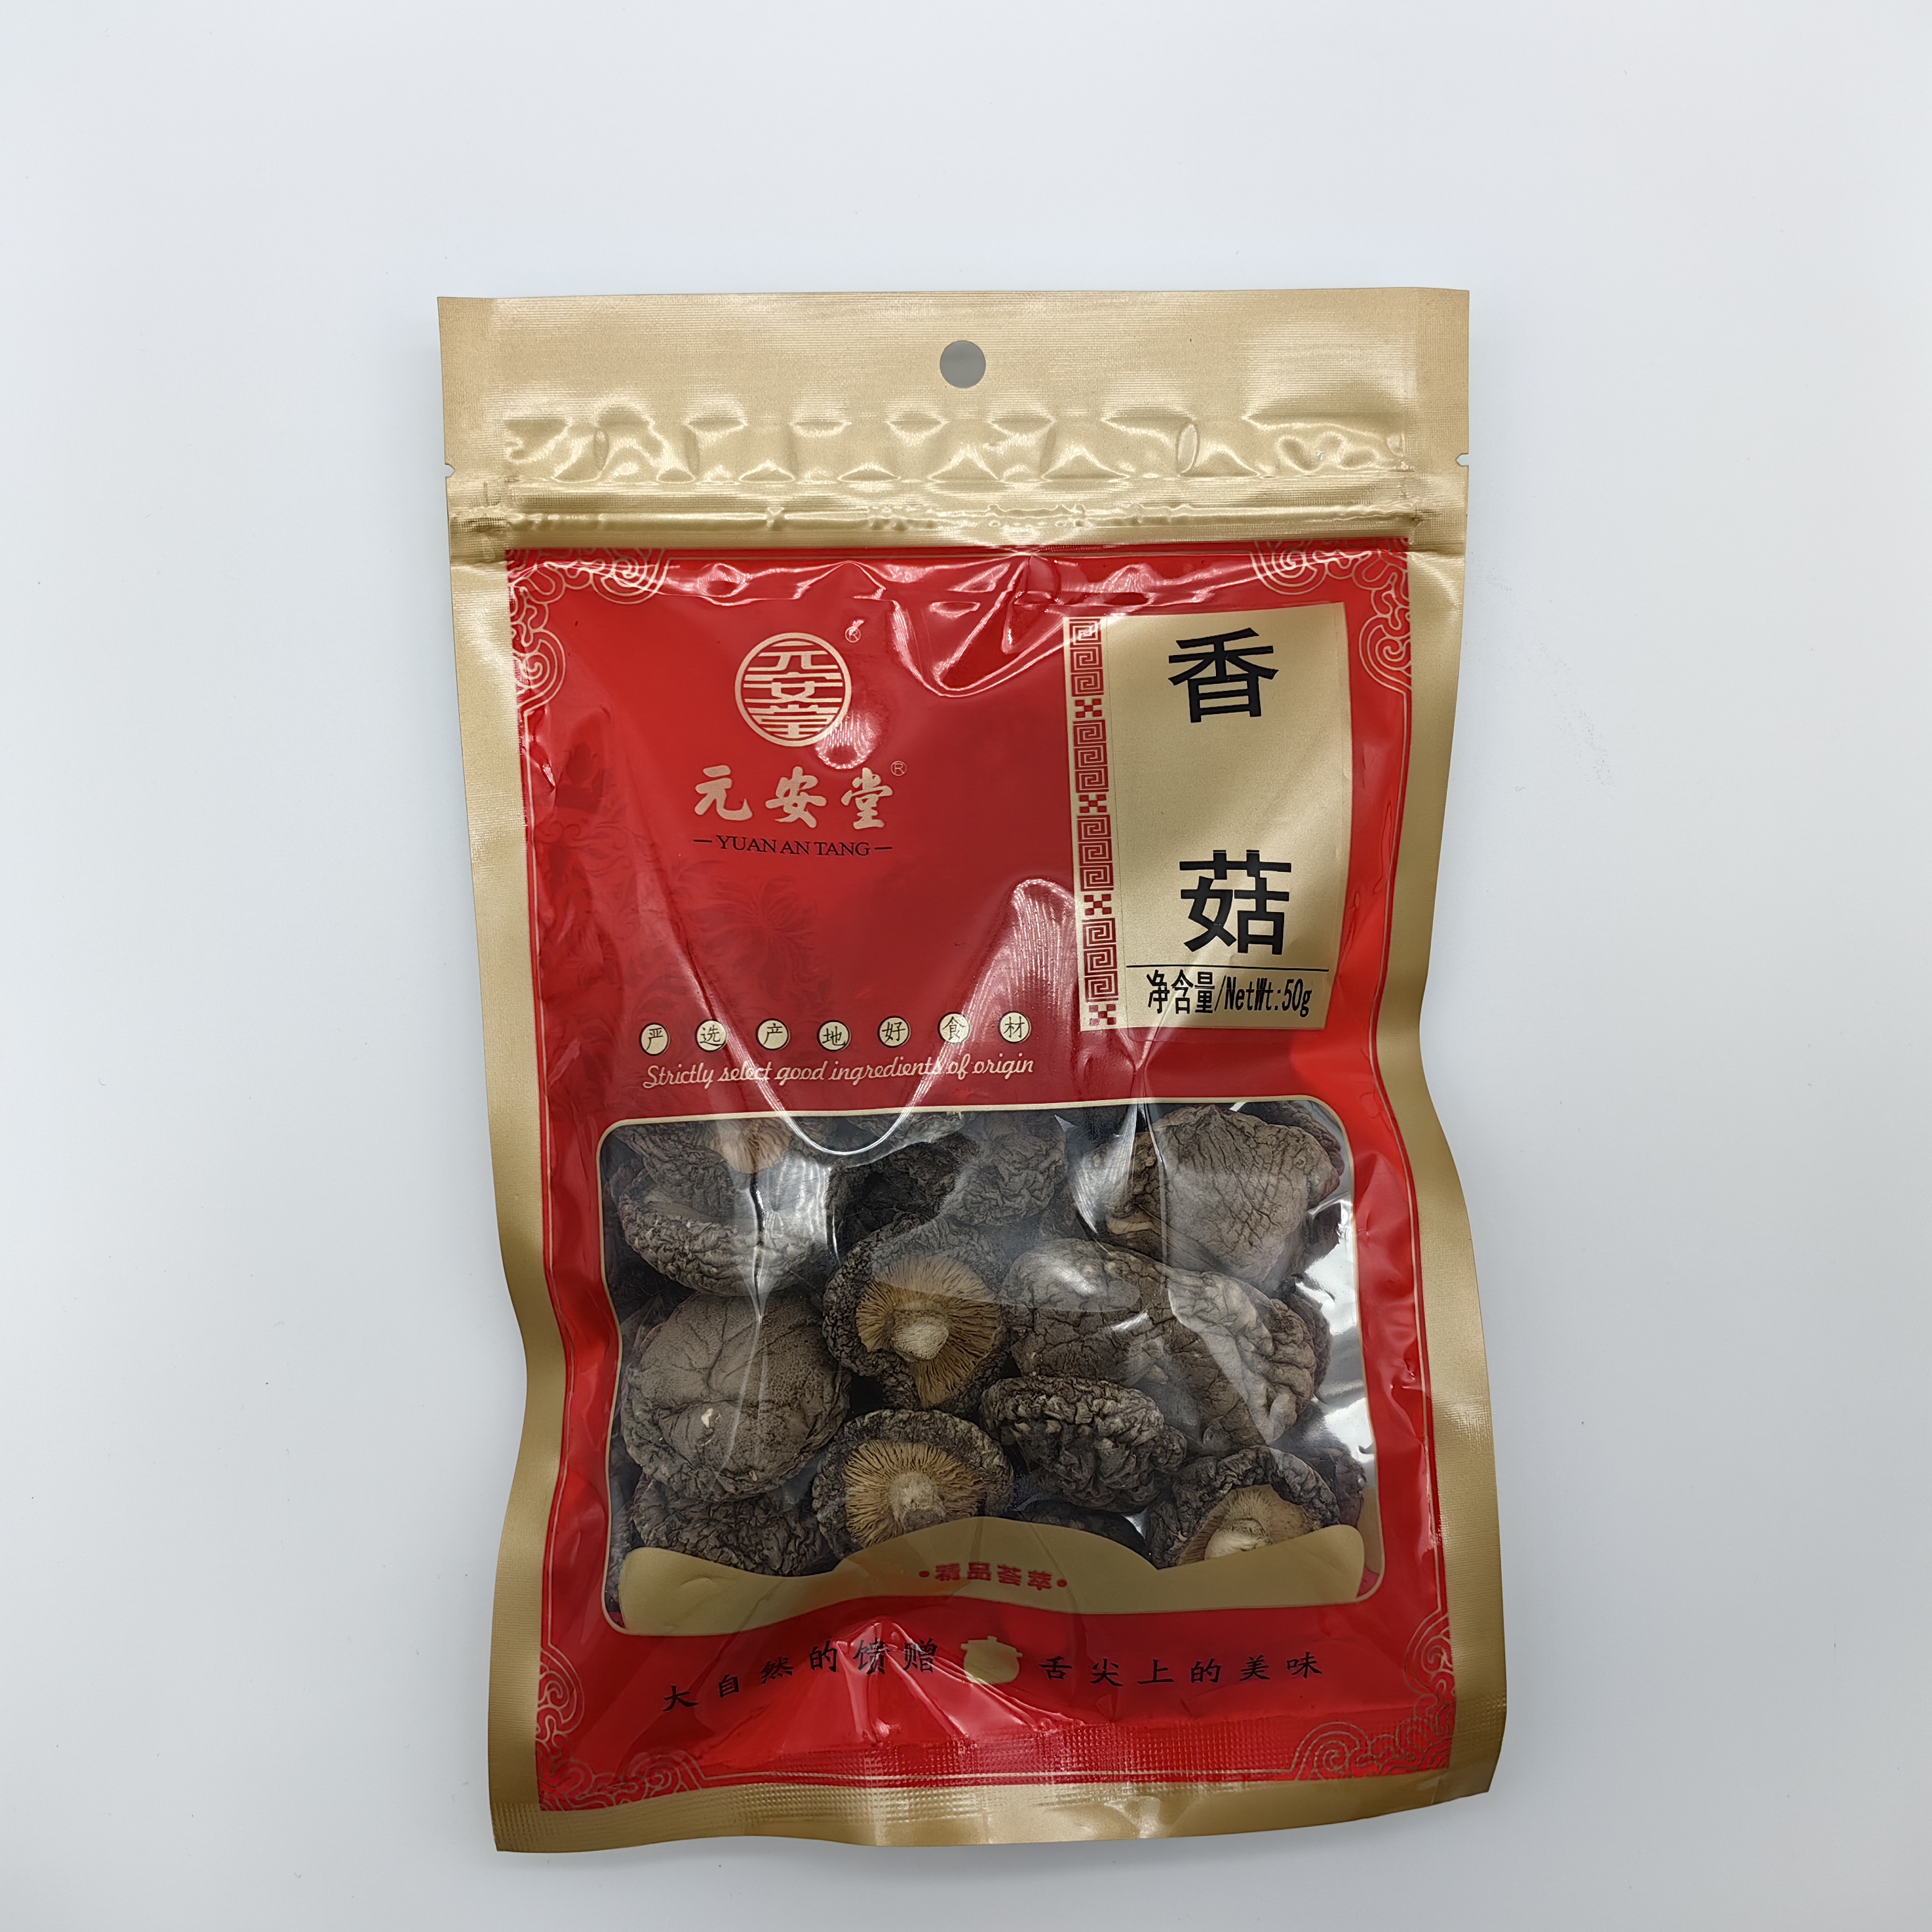 Mushroom Products Delicious Food Dried Shiitake Mushrooms Herbs